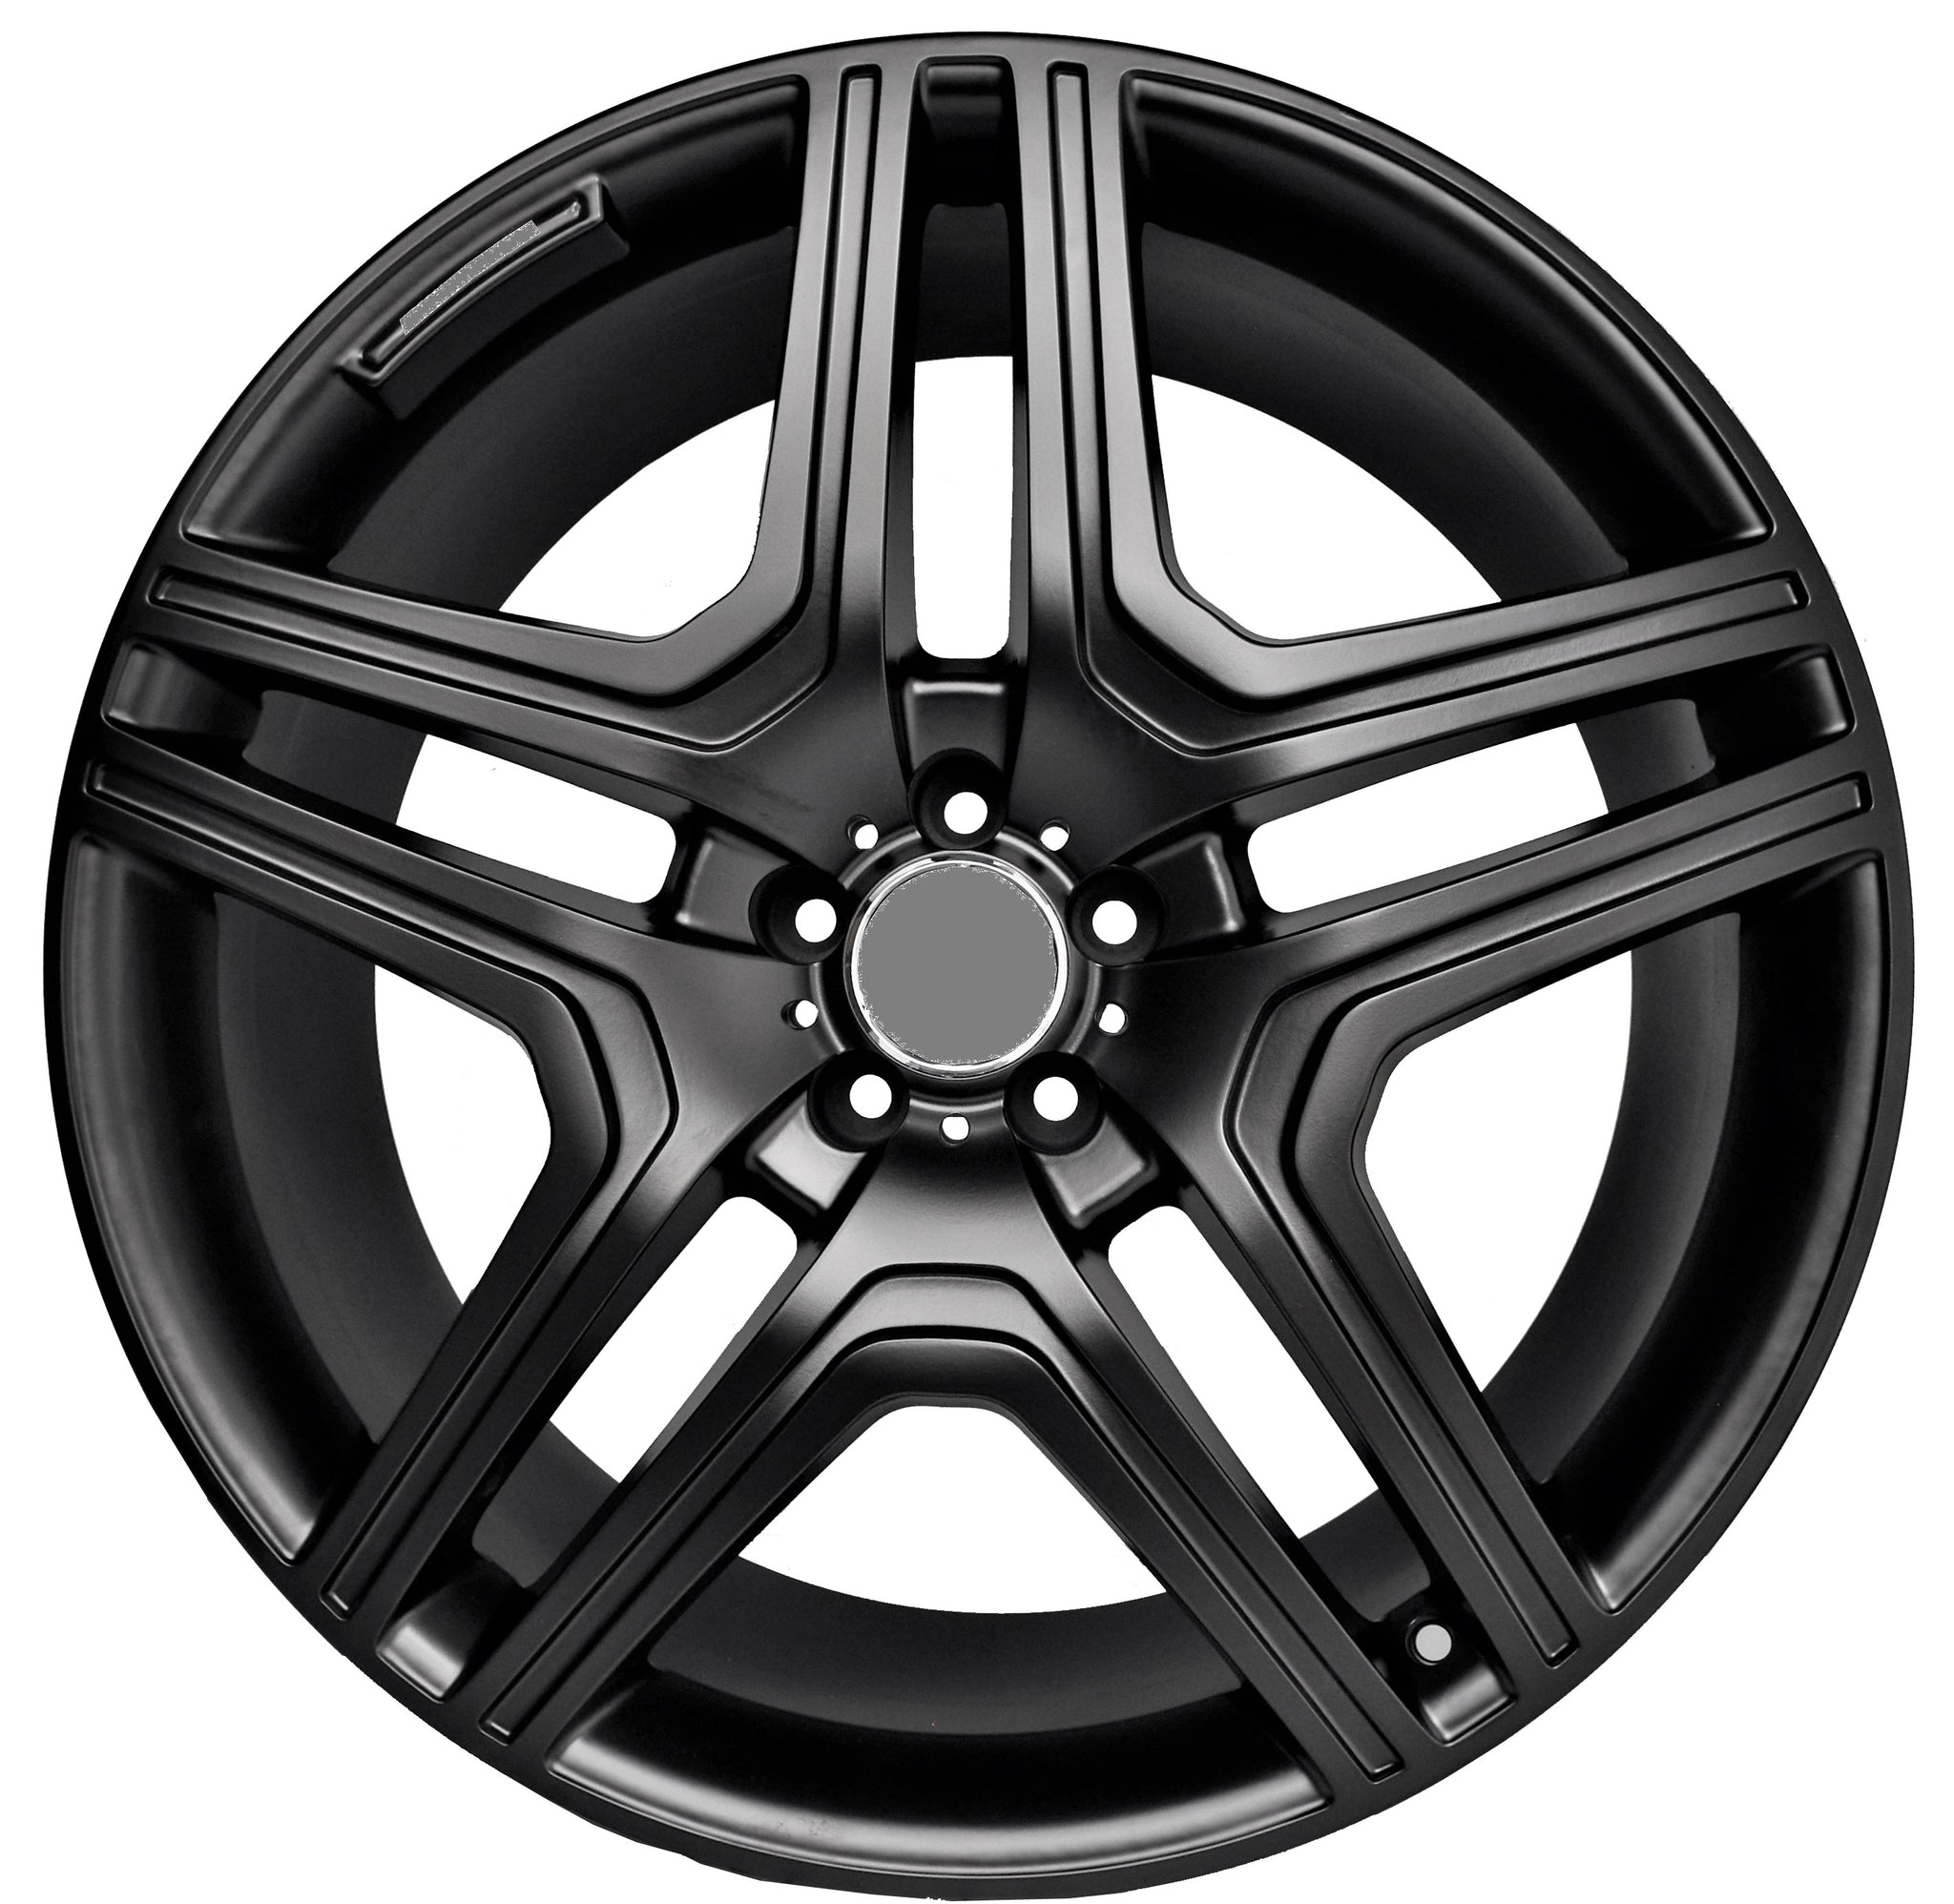 22" Inch Black Wheels Rims ( Full Set of 4 ) fit for Mercedes Benz GL